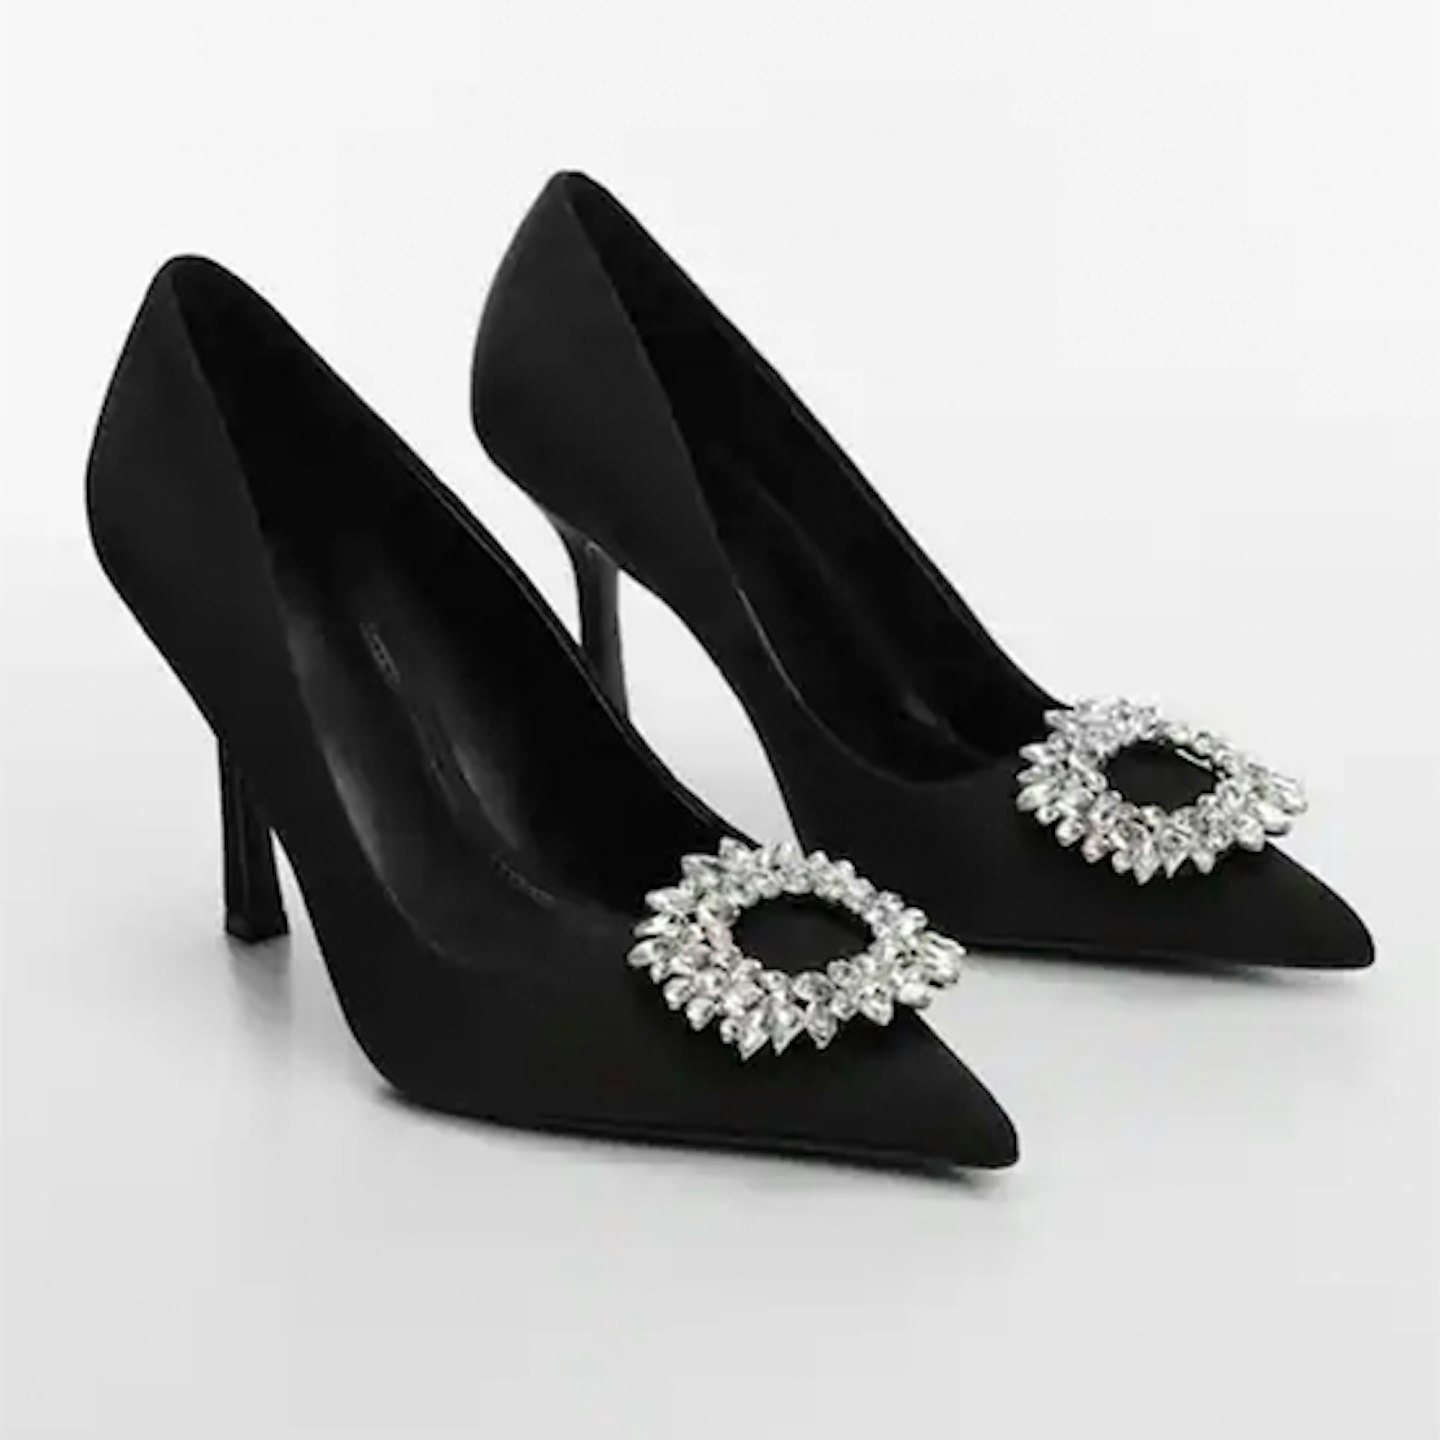 Black festive heels